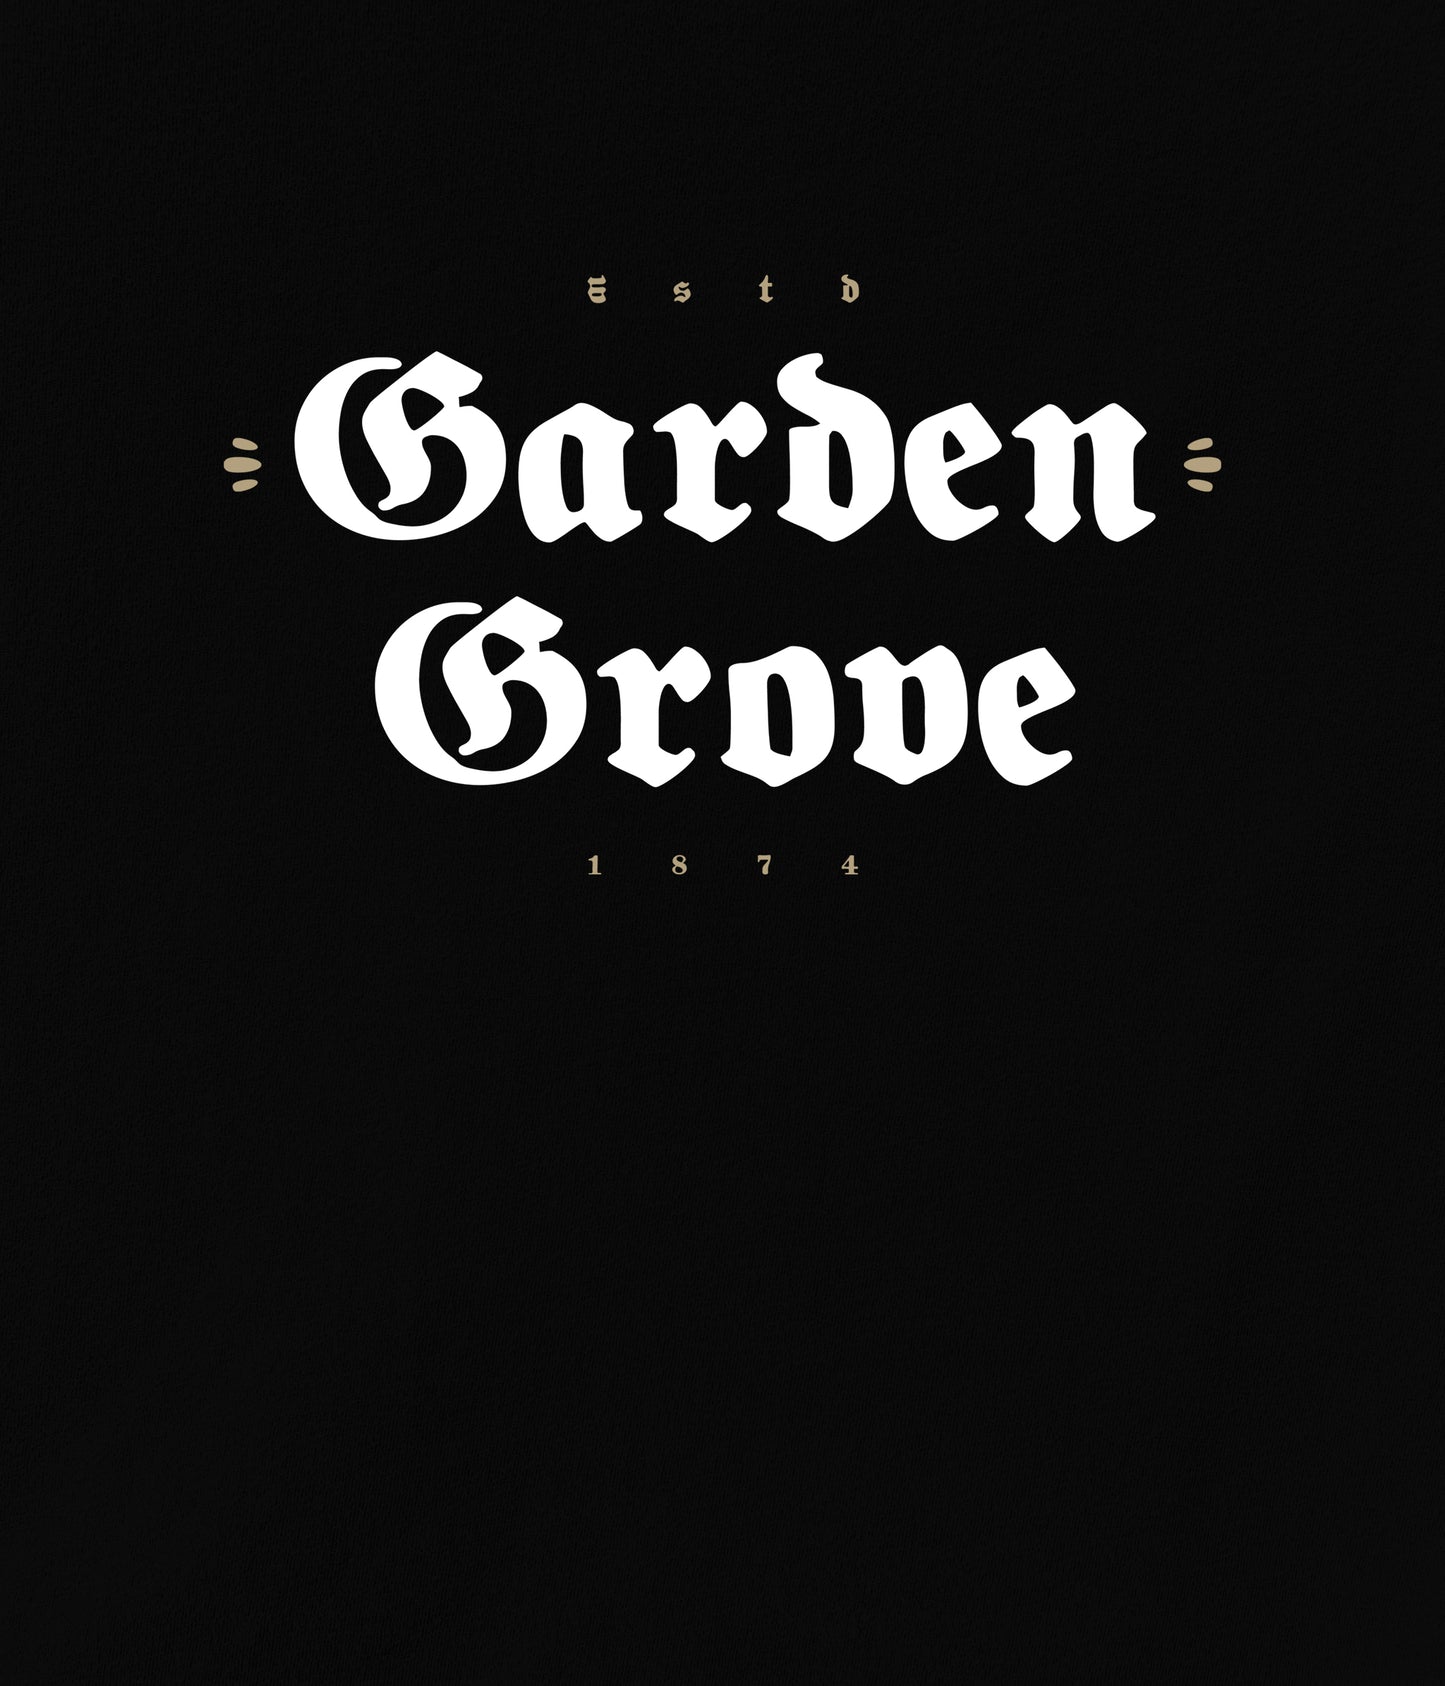 Garden Grove Established